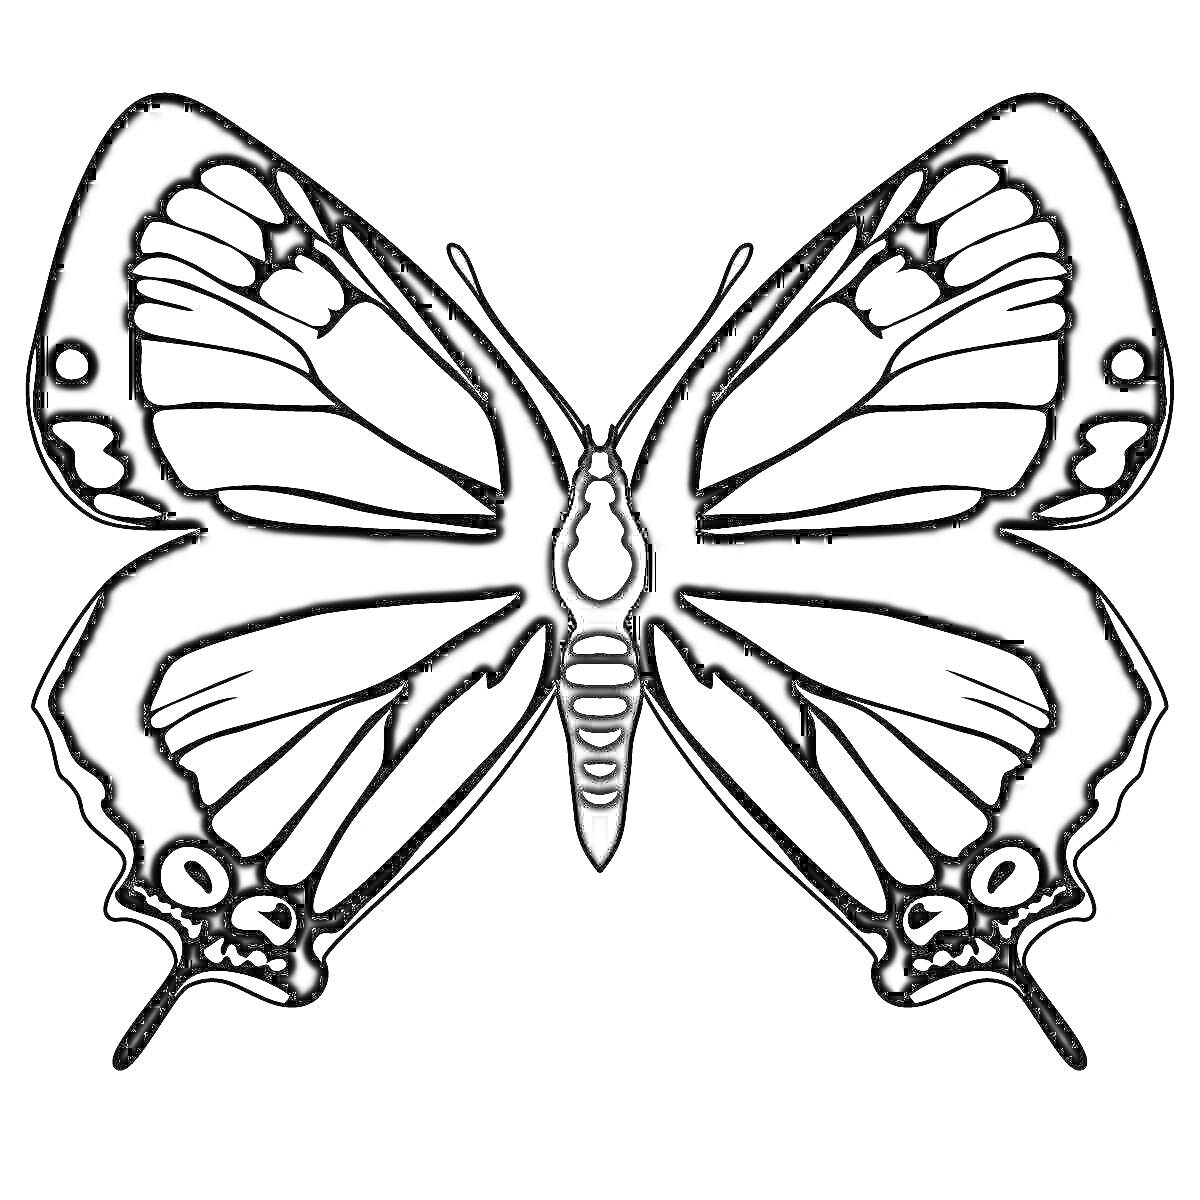 Раскраска Чёрно-белая бабочка с узорами на крыльях